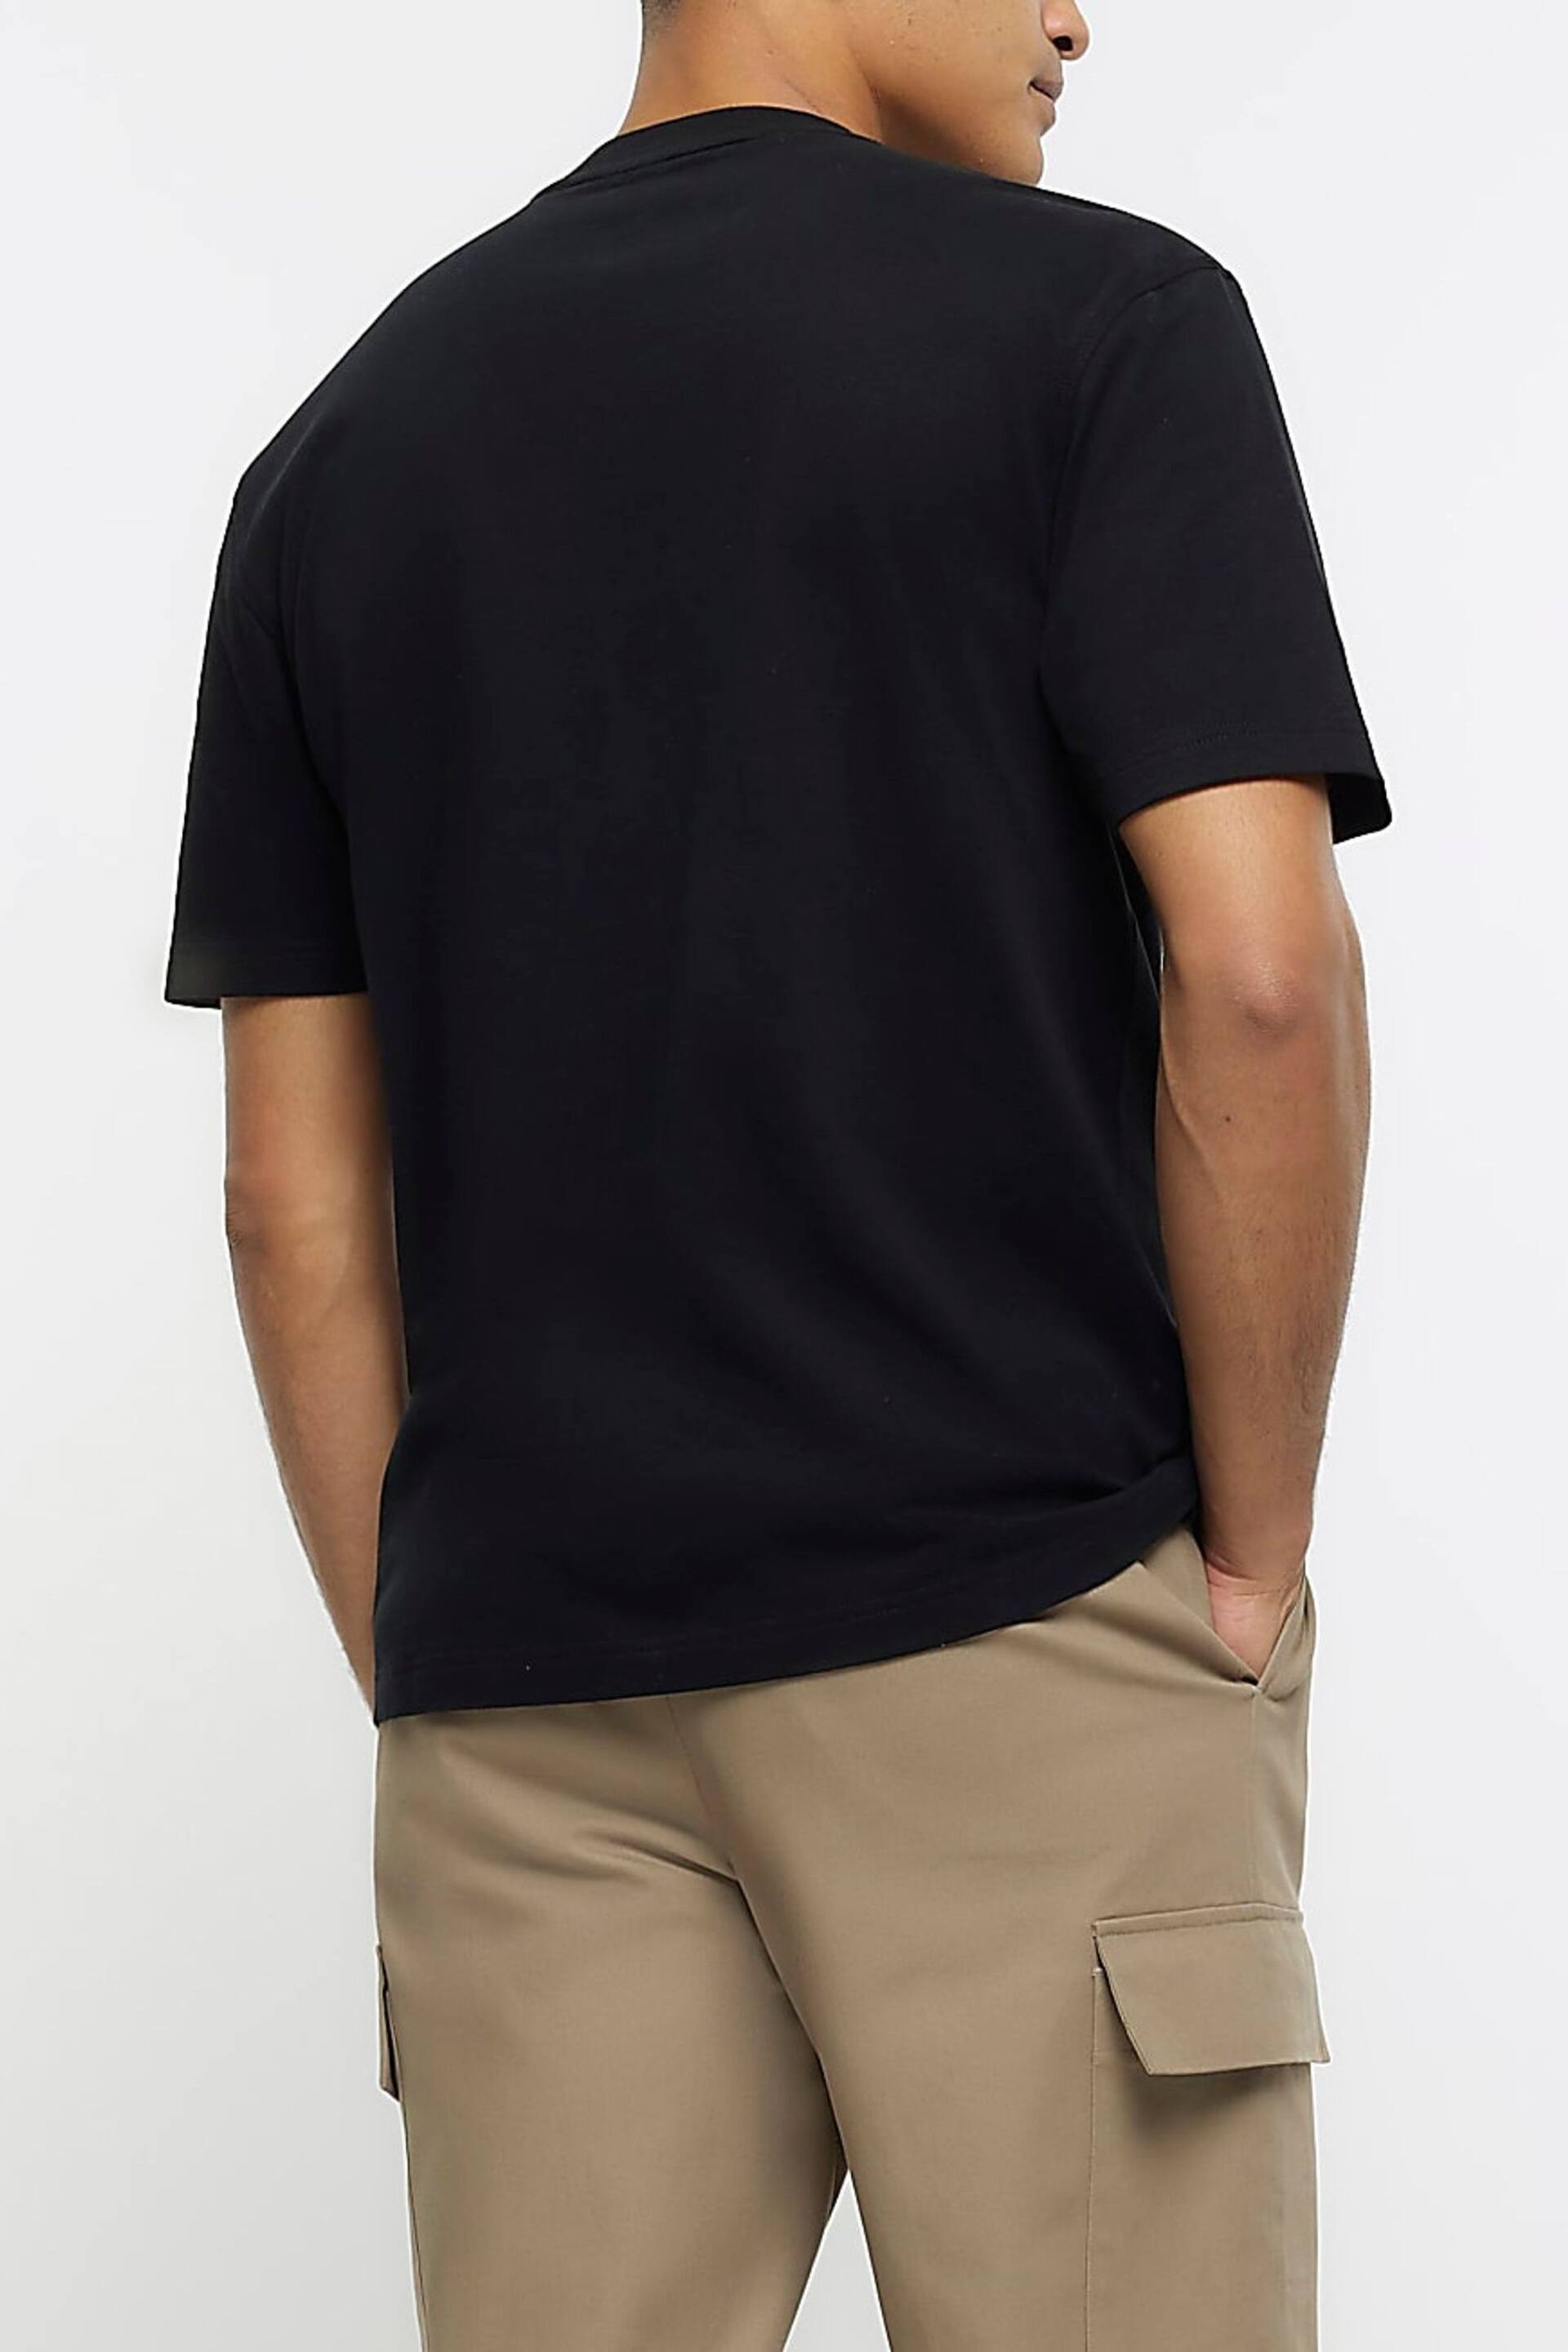 River Island Black Regular Fit T-Shirt - Image 3 of 6